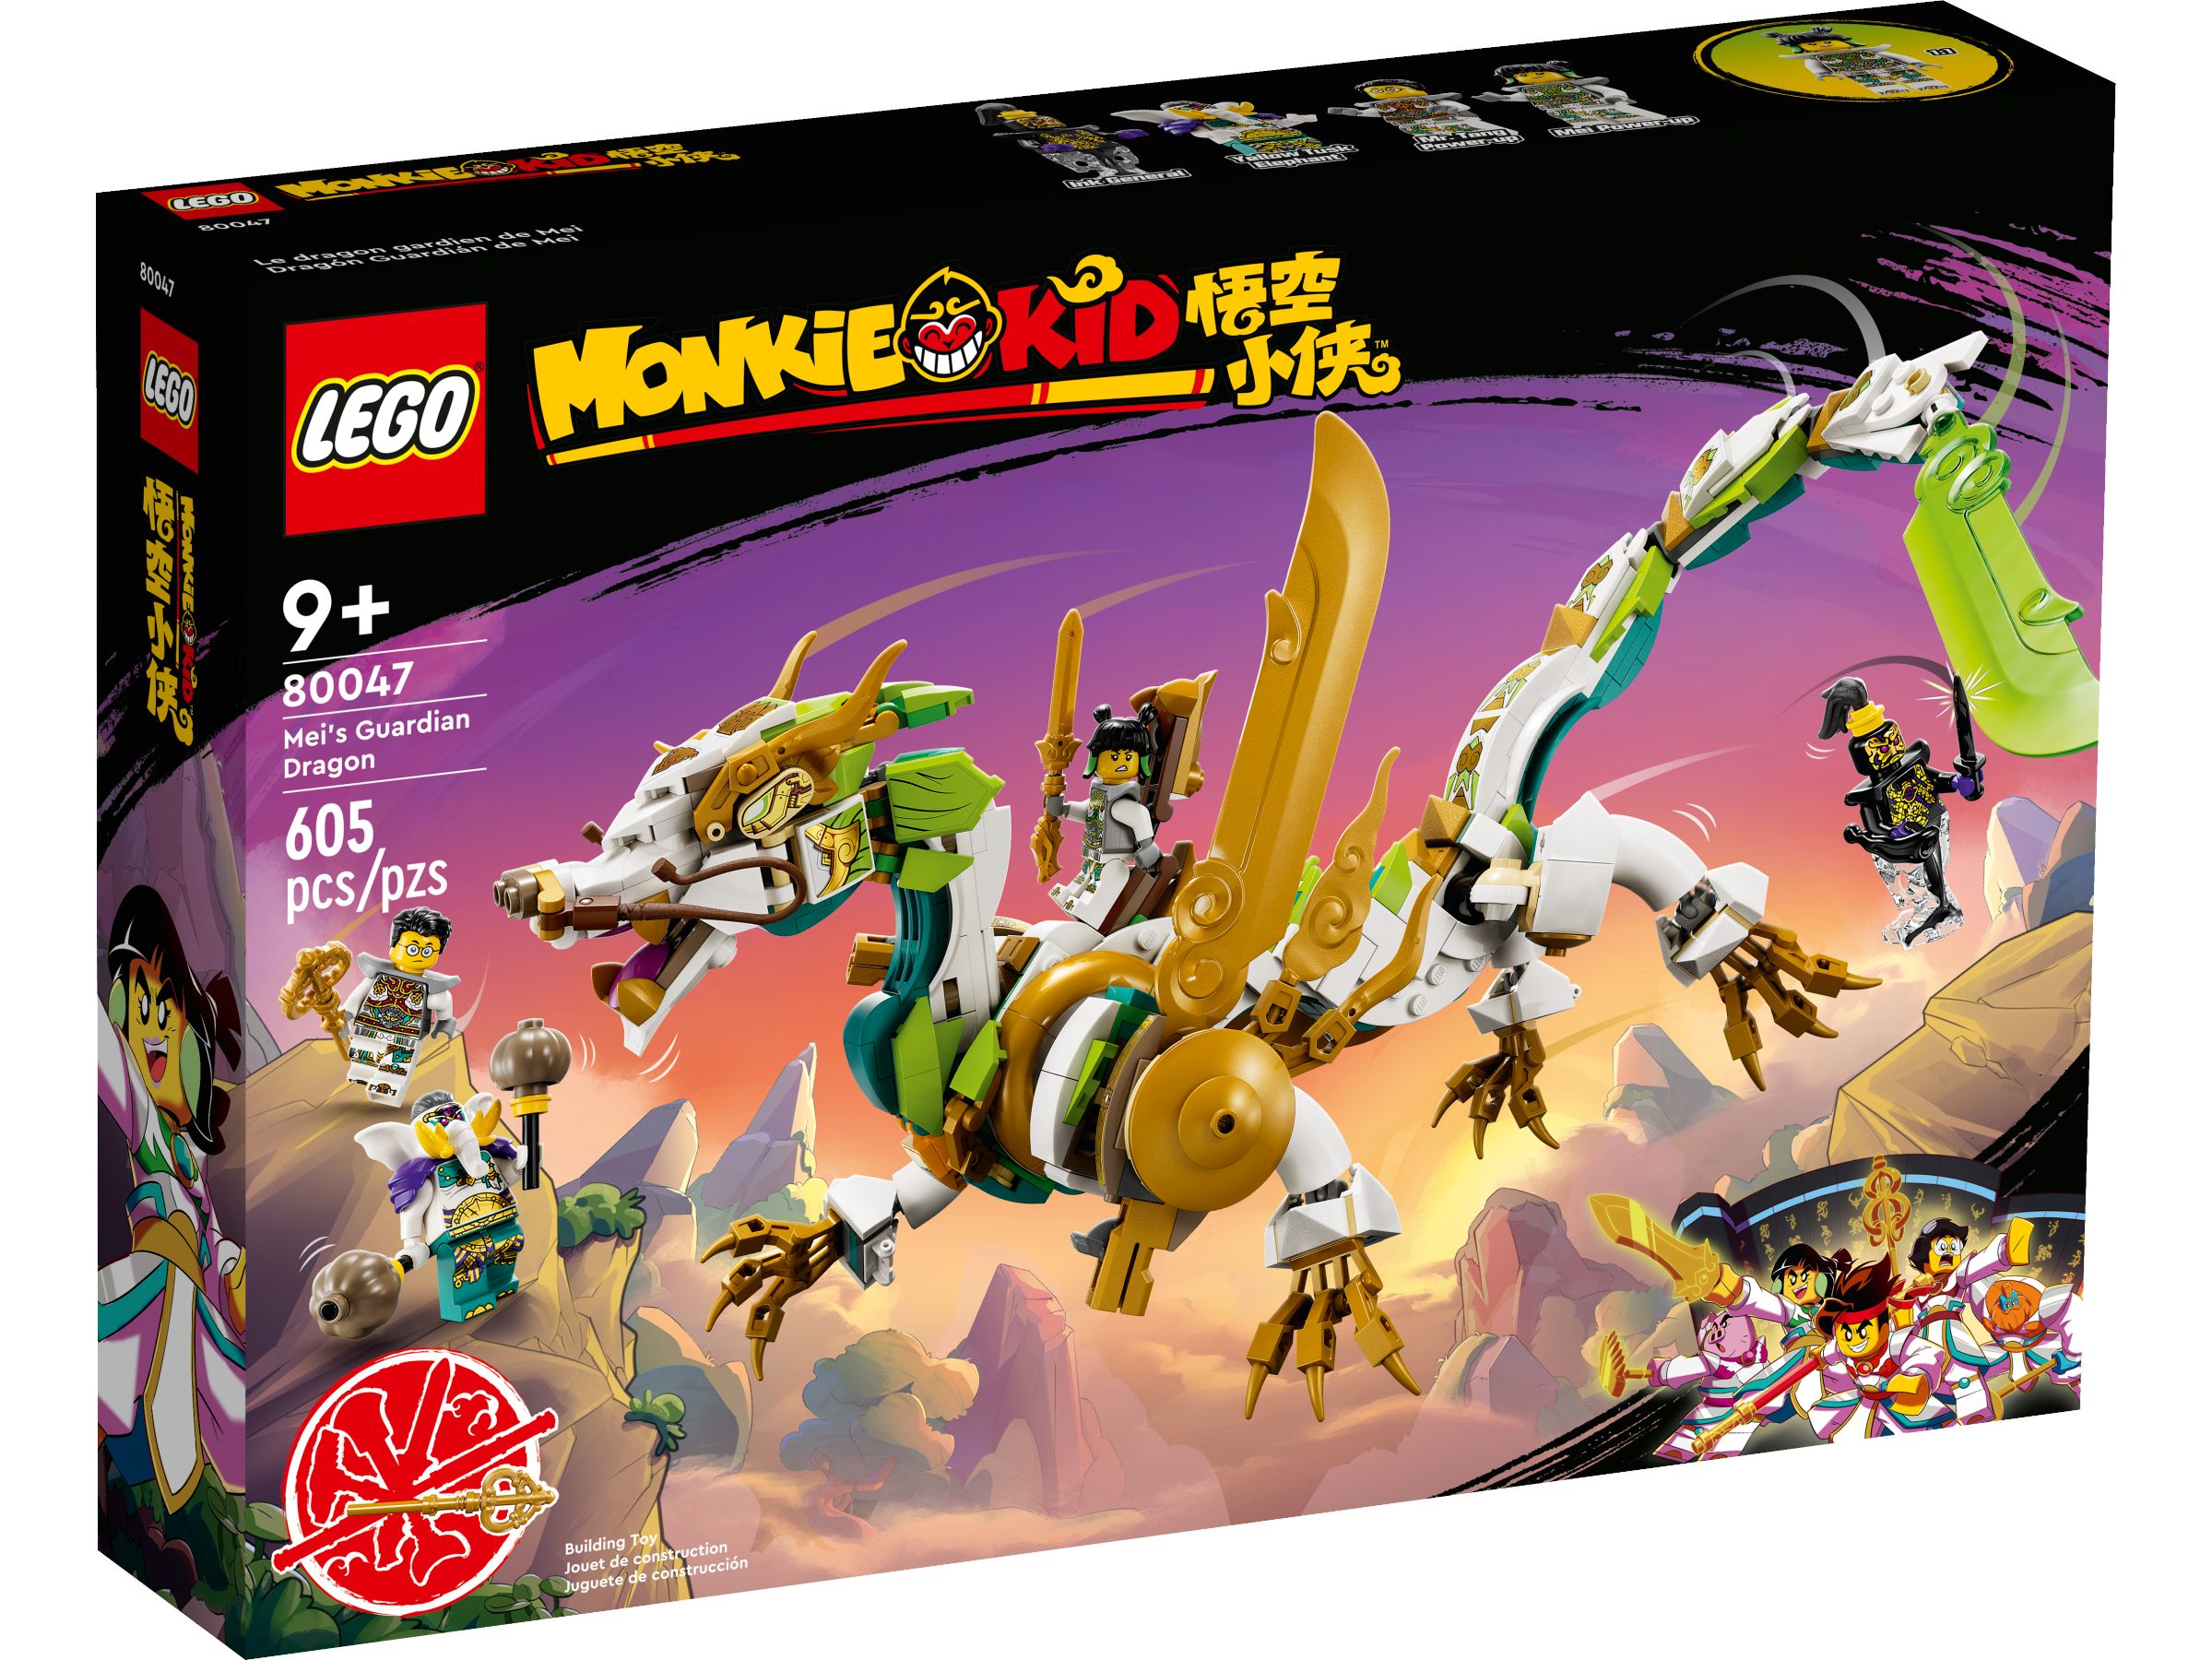 LEGO Monkie Kid 80047 Meis Schutzdrache LEGO_80047_Box1_v39.jpg